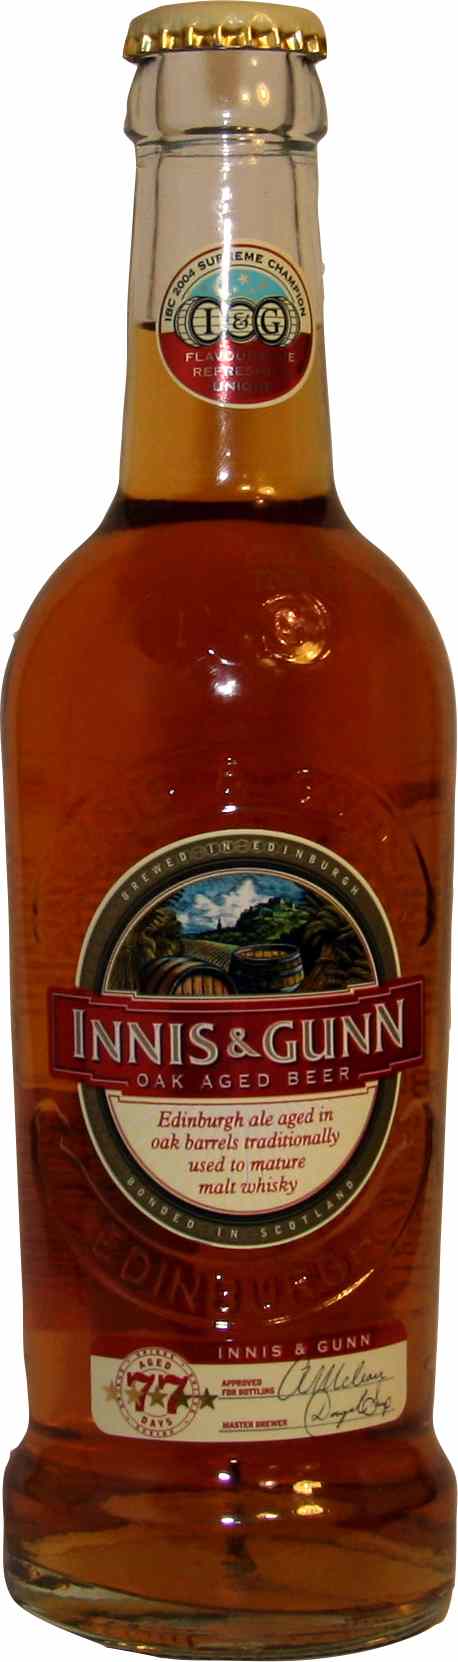 innis-gunn-oak-aged-beer.jpg